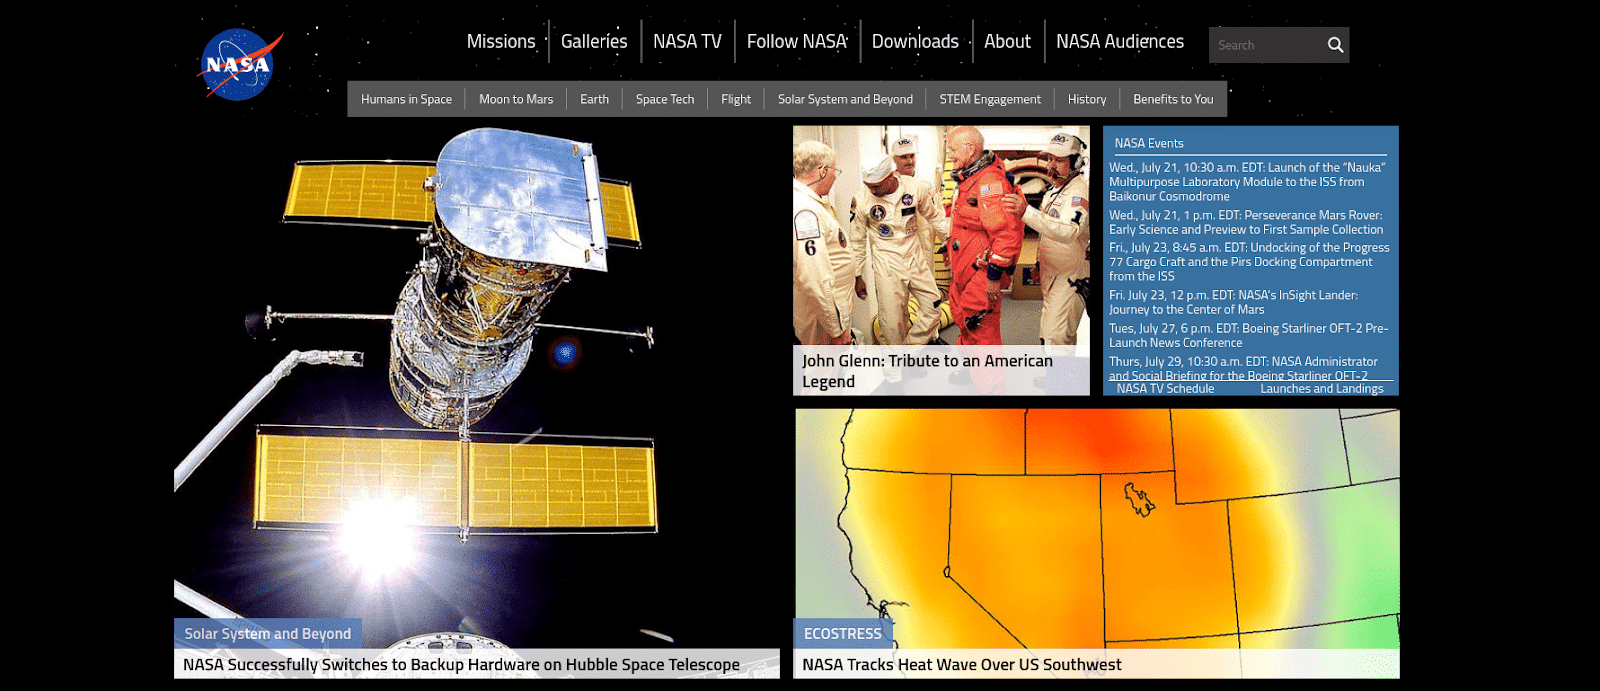 NASA's homepage screenshot.